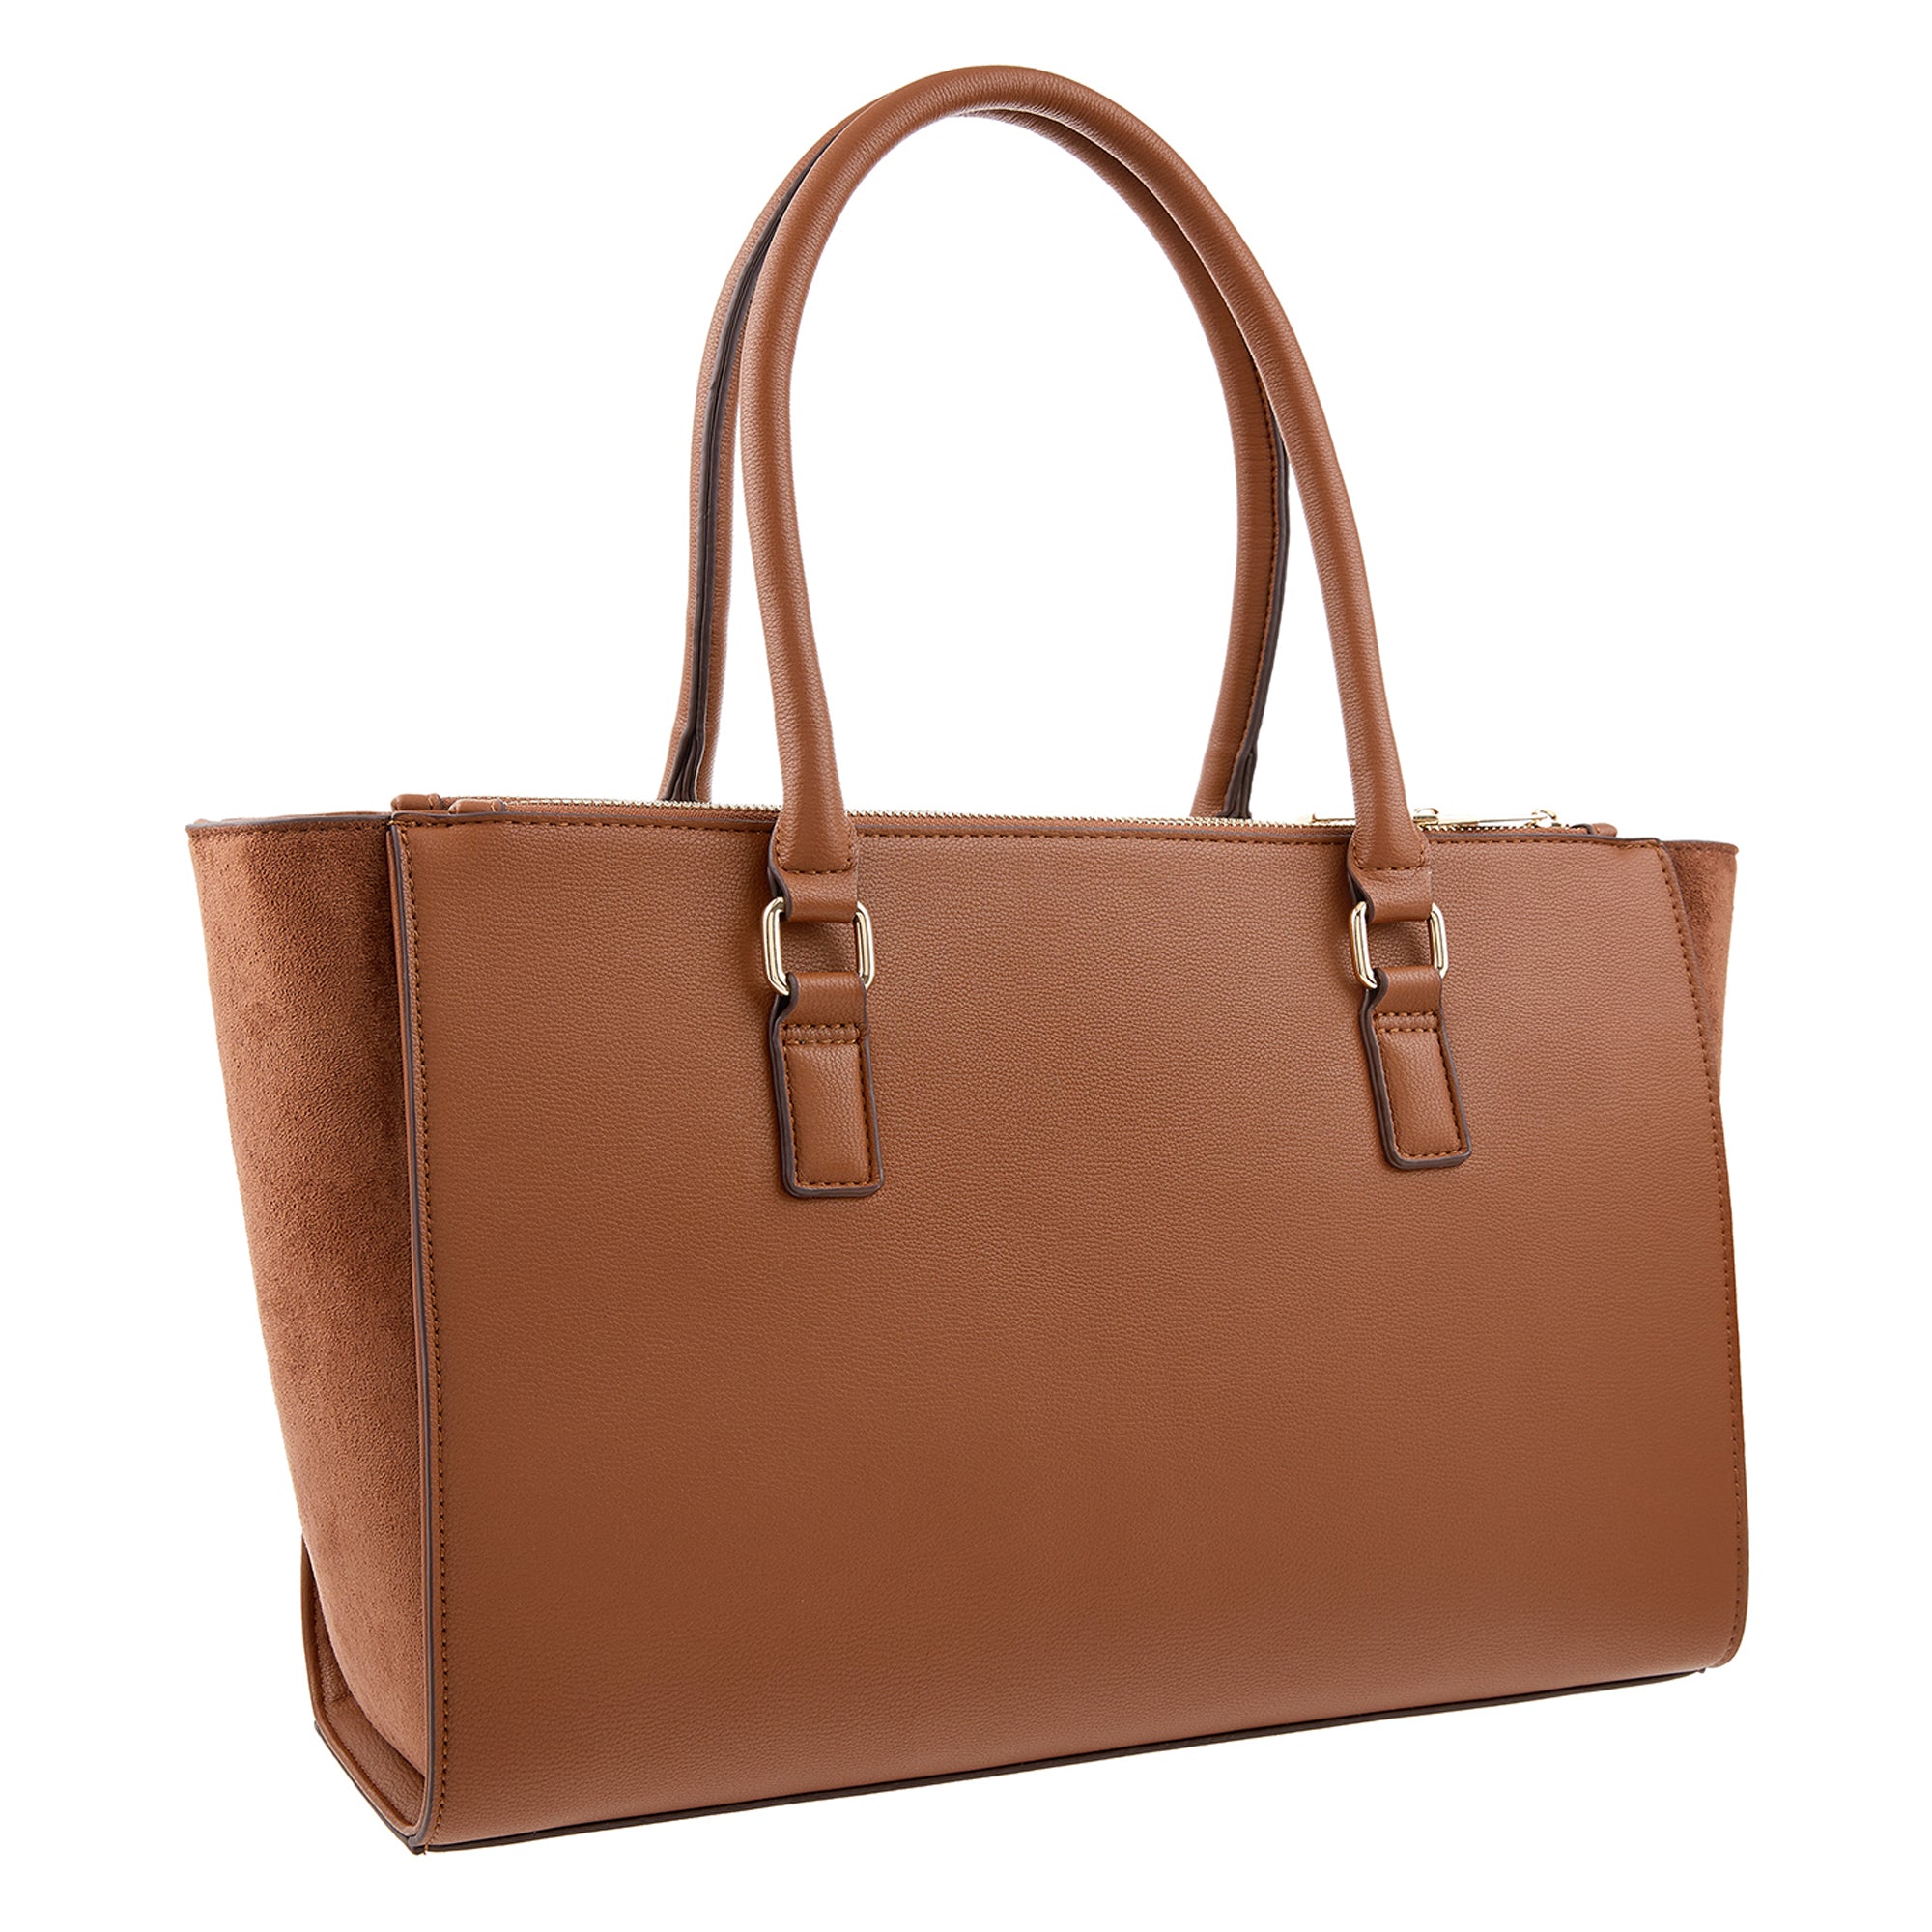 Where can you buy a replica Louis Vuitton handbag in the UK? - Quora